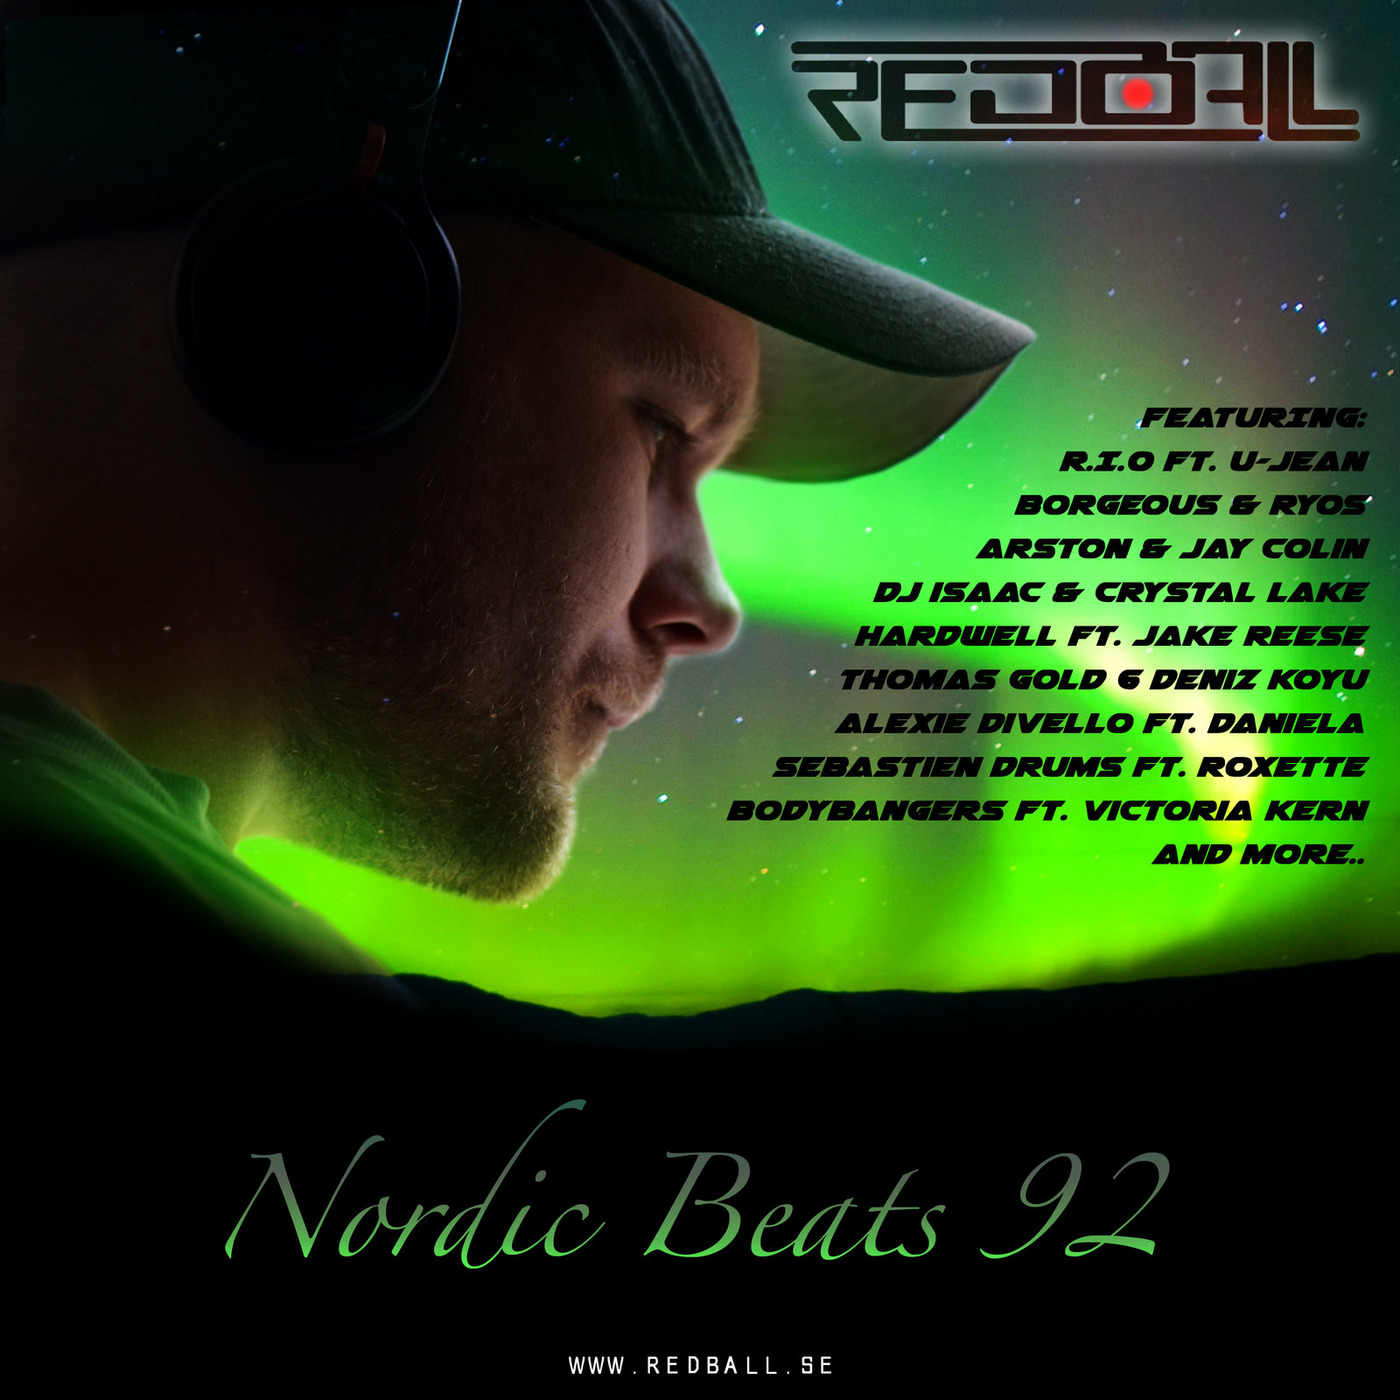 Nordic Beats 92 by redball